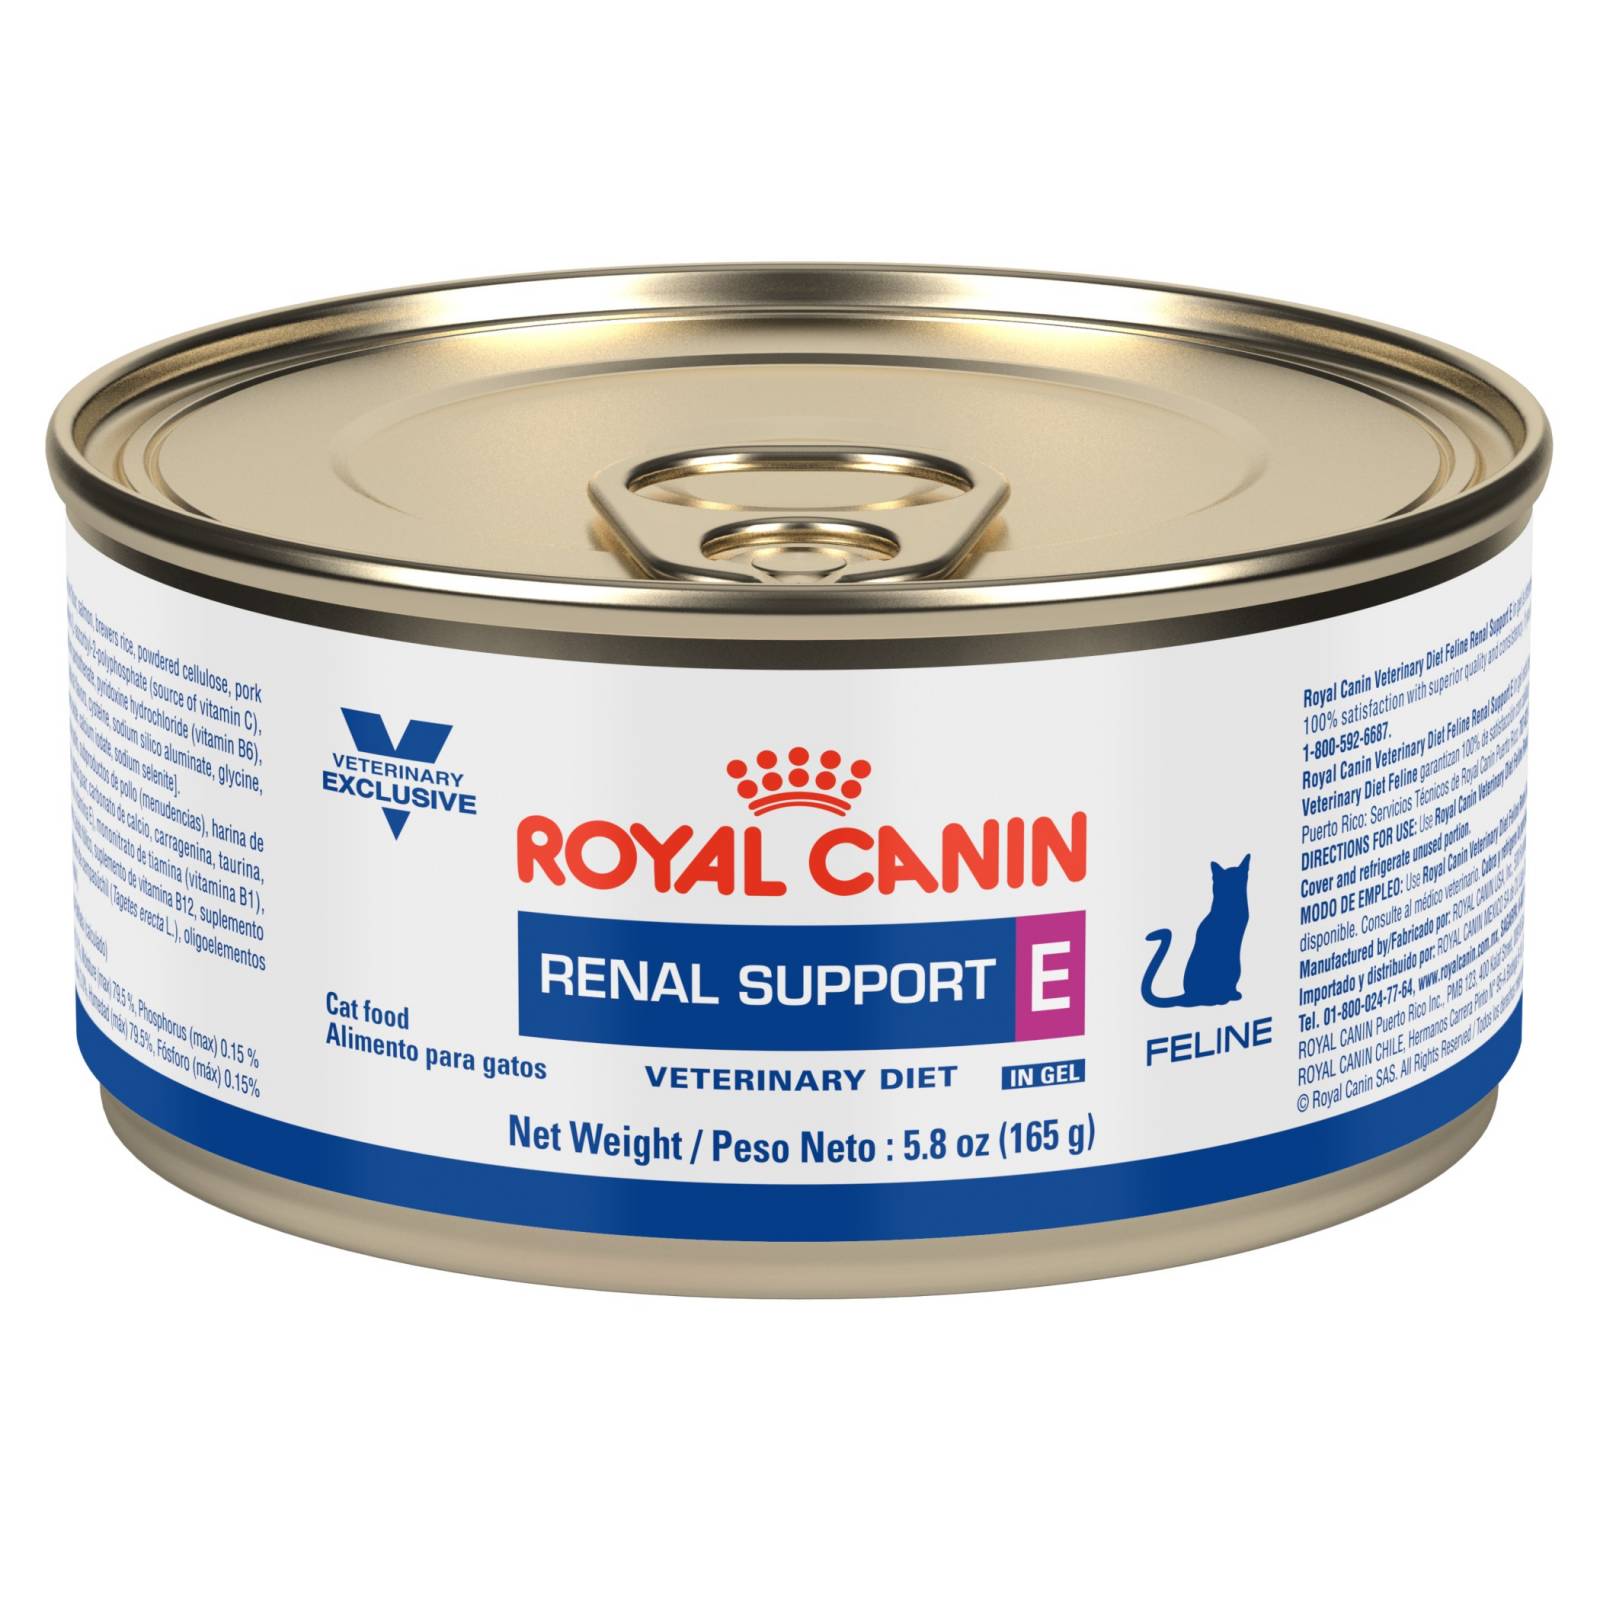 ROYAL CANIN LATA RENAL SUPPORT E FELINE 0.165gr (24 pzs)